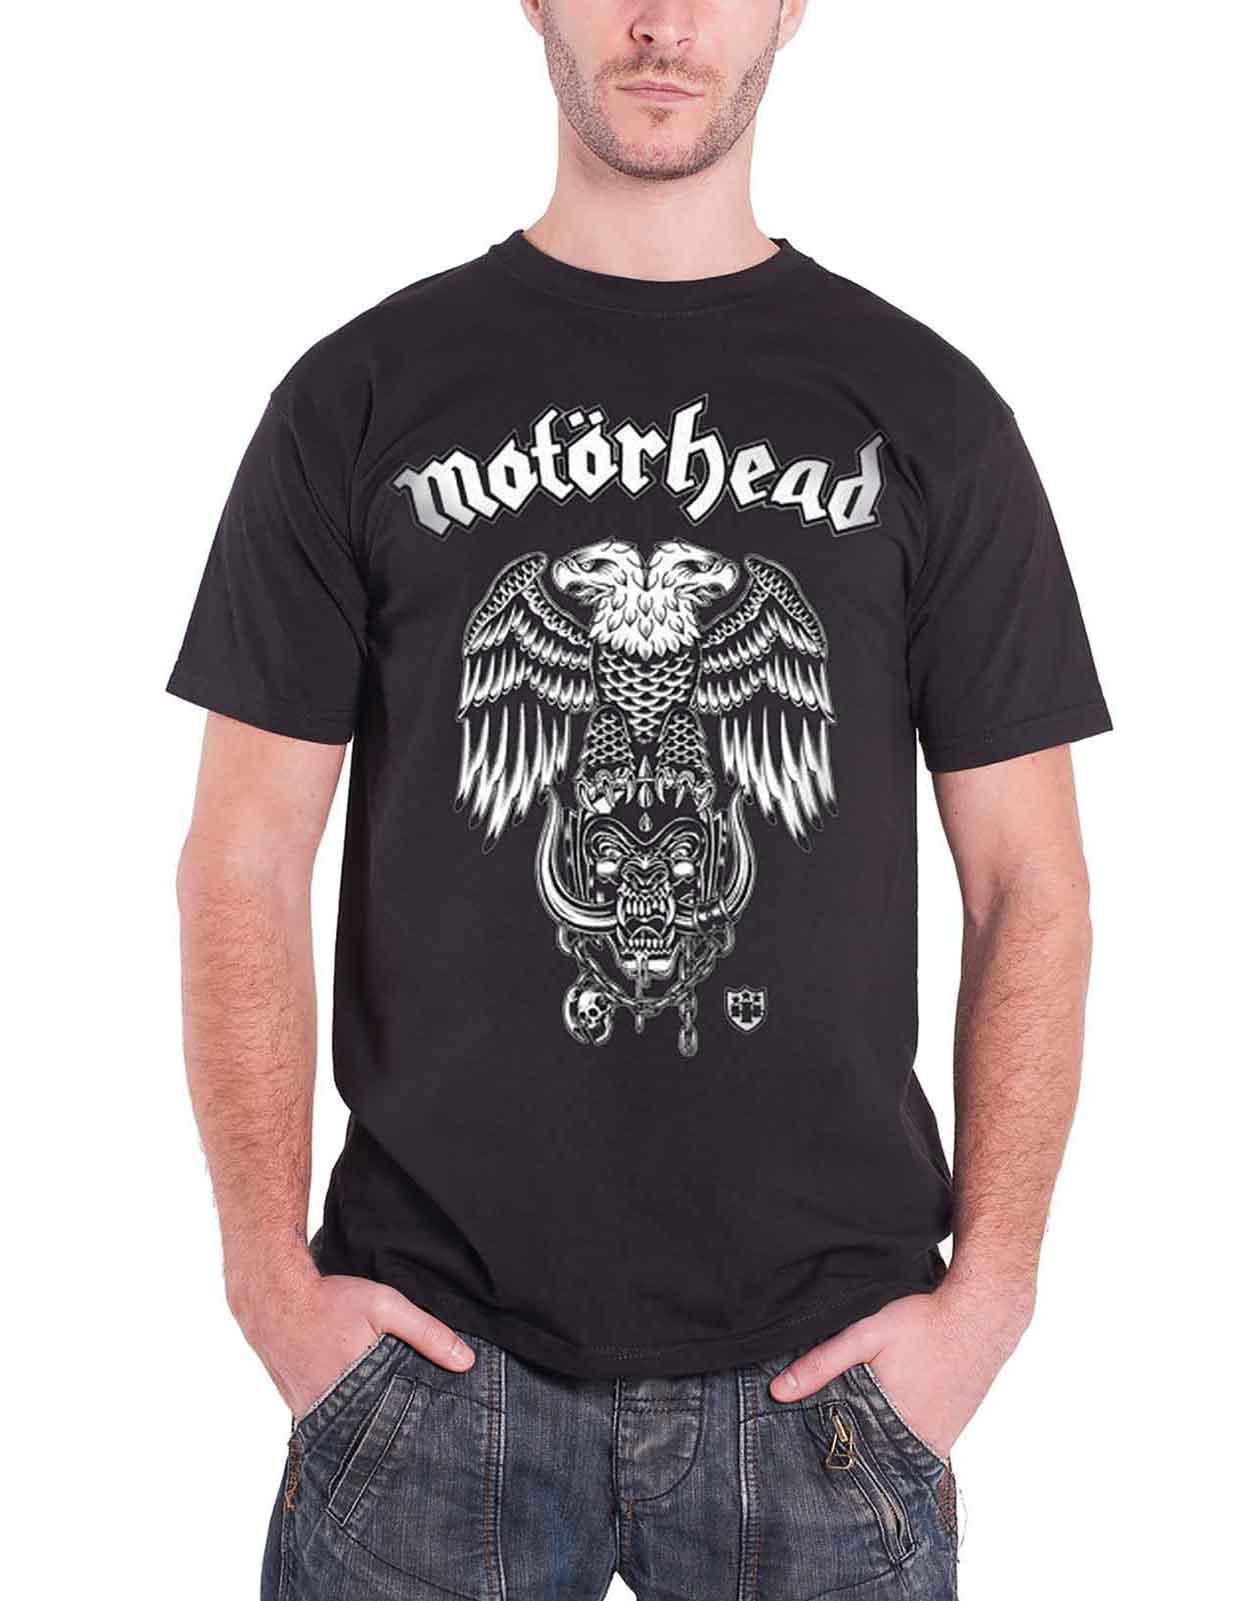 Motorhead T Shirt Hiro Double Eagle Warpig band logo Official Mens Black